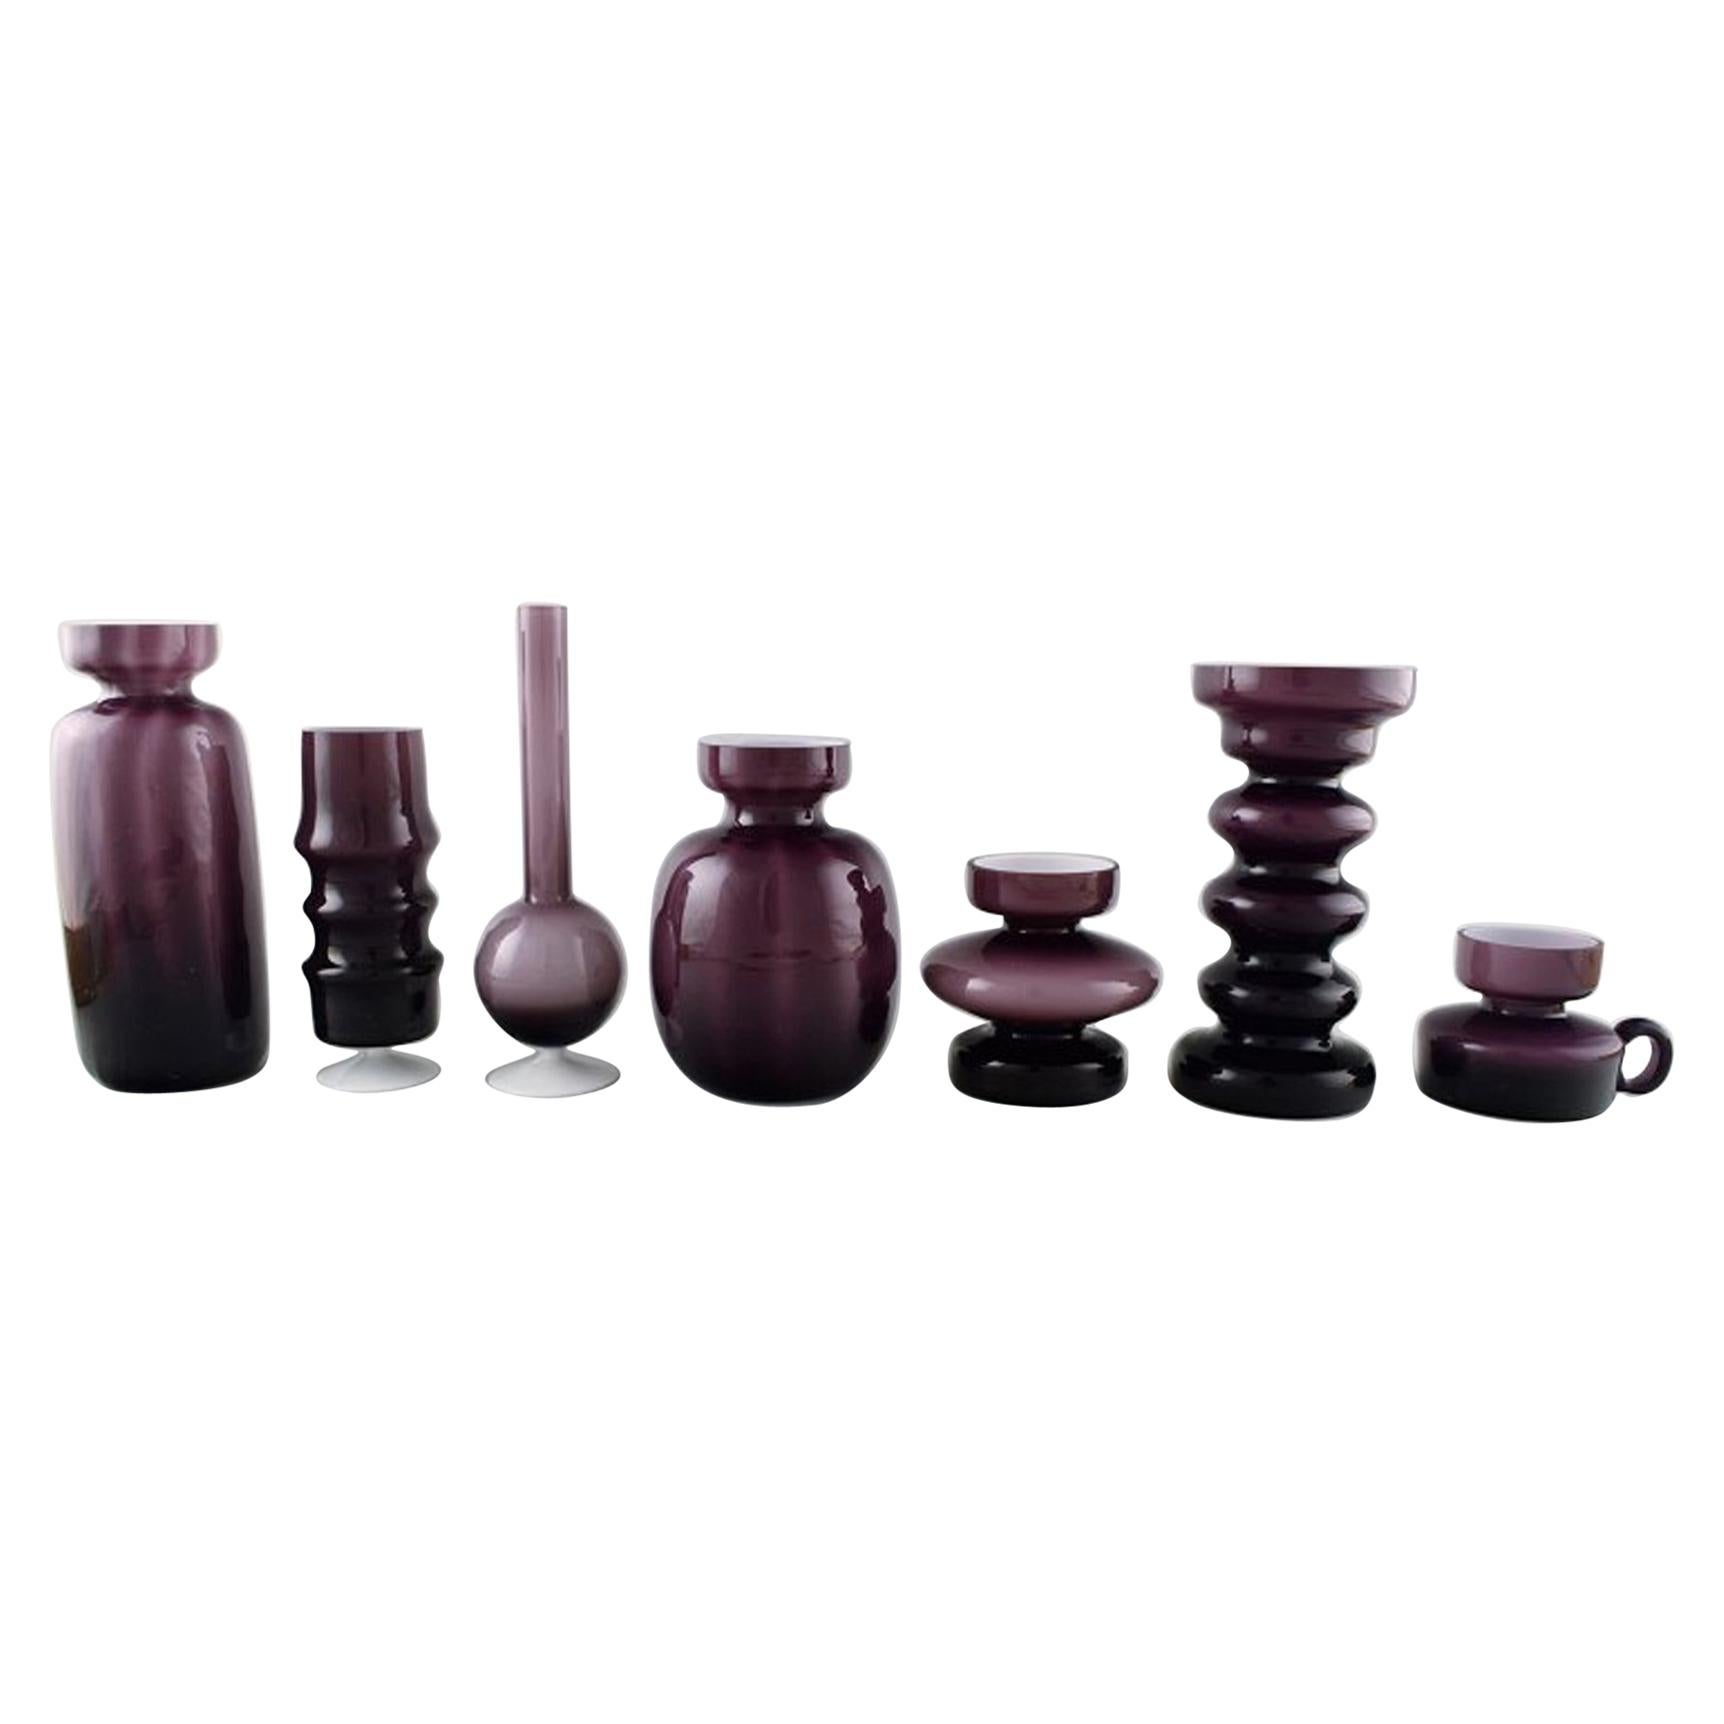 Collection of Swedish Art Glass, Seven Purple Vases in Modern Design